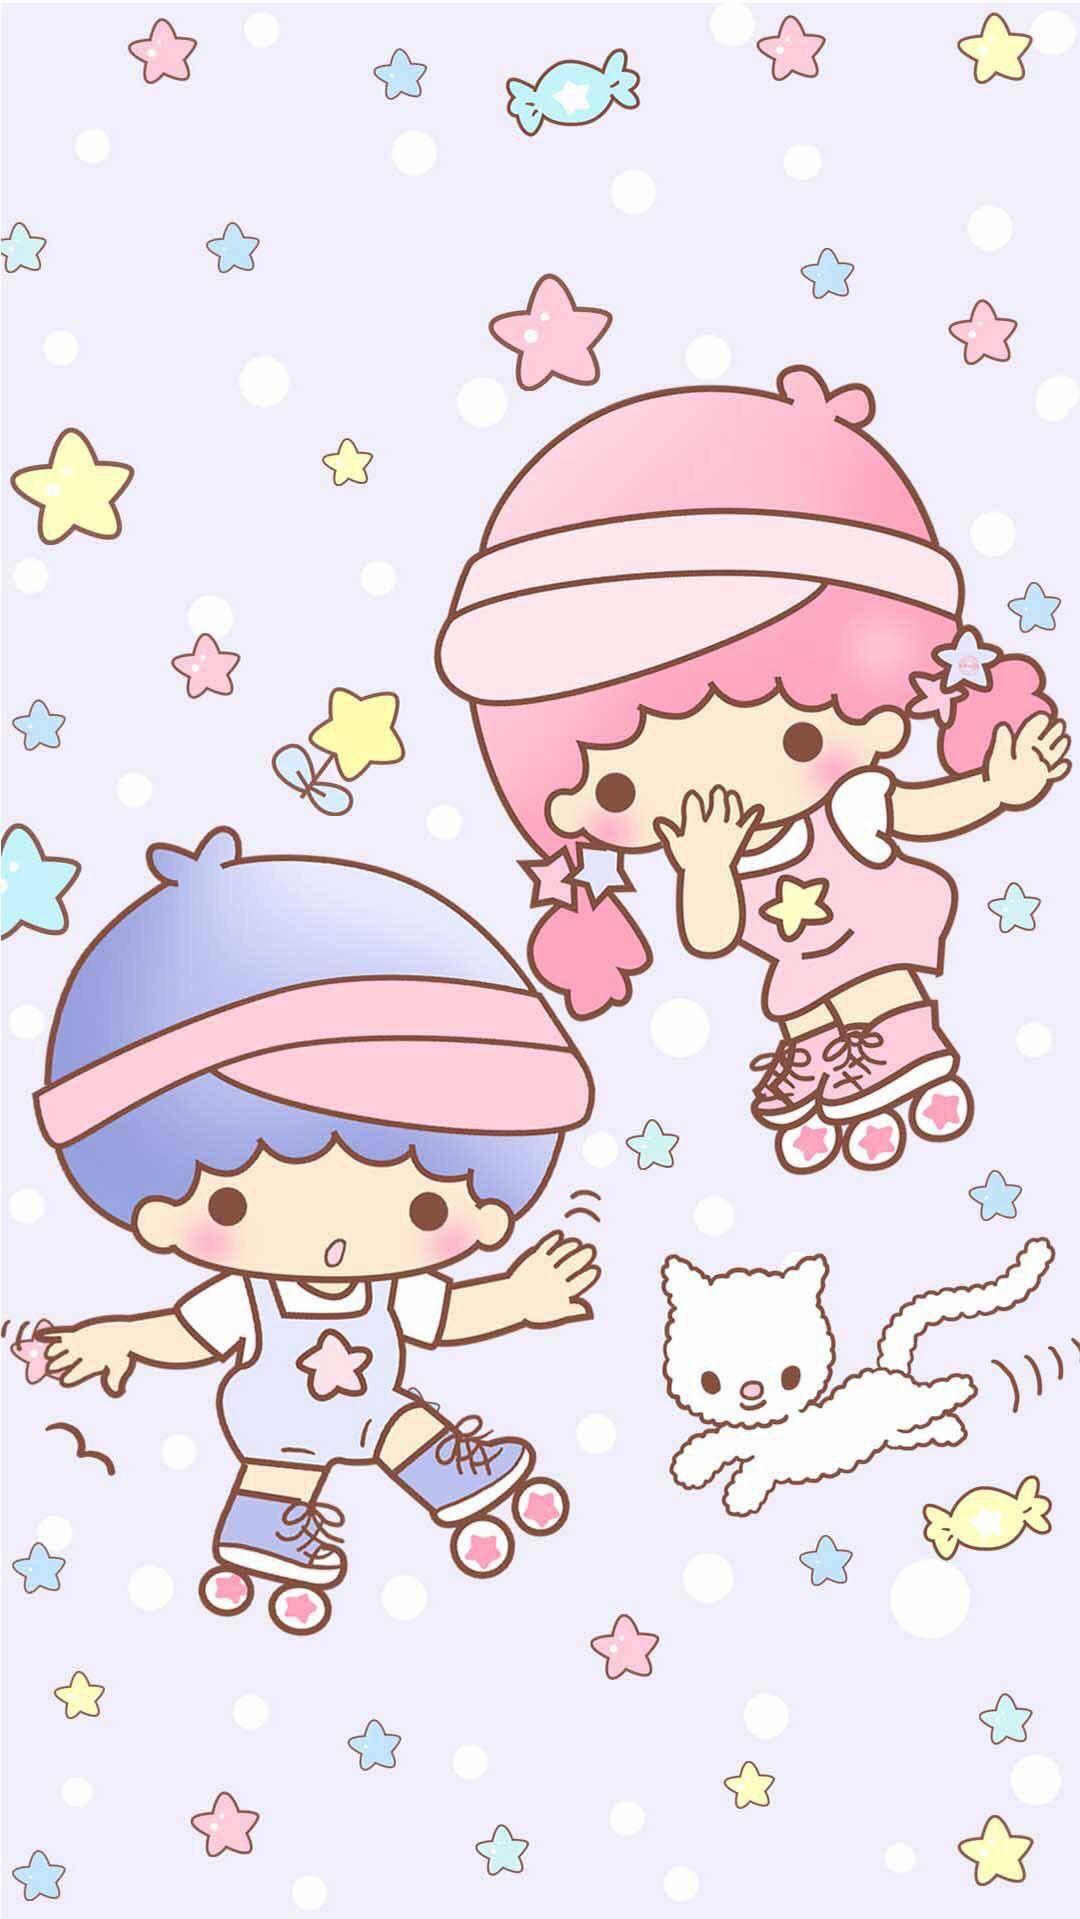 Sanrio Characters Little Twin Stars   1080x1920 Wallpaper   teahubio